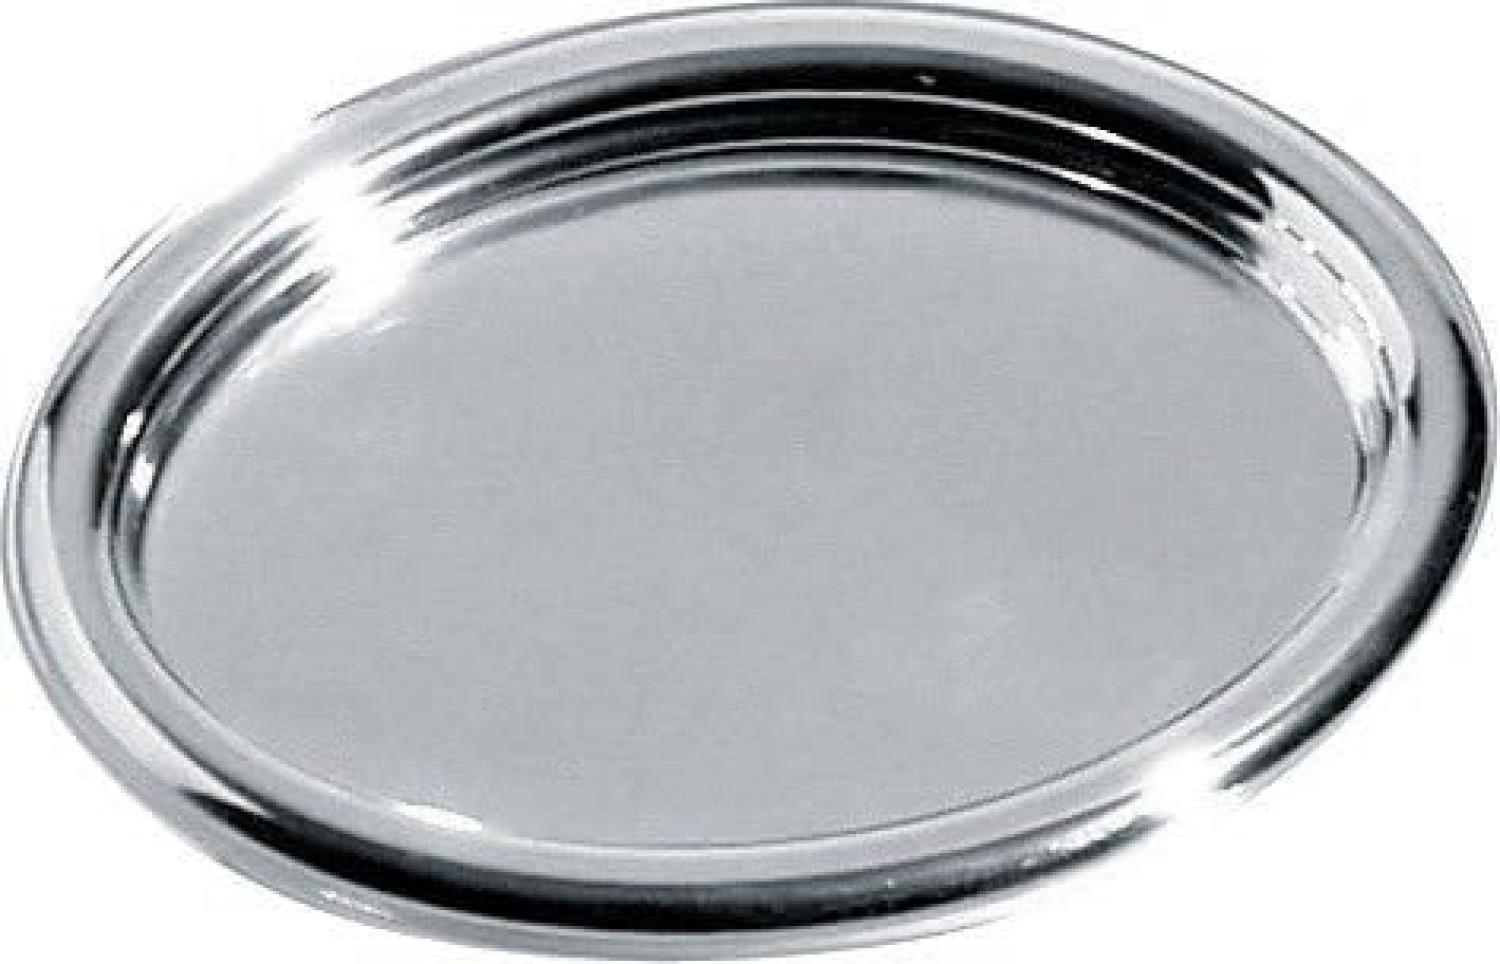 Alessi Tablett oval aus Edelstahl glänzend poliert Bild 1